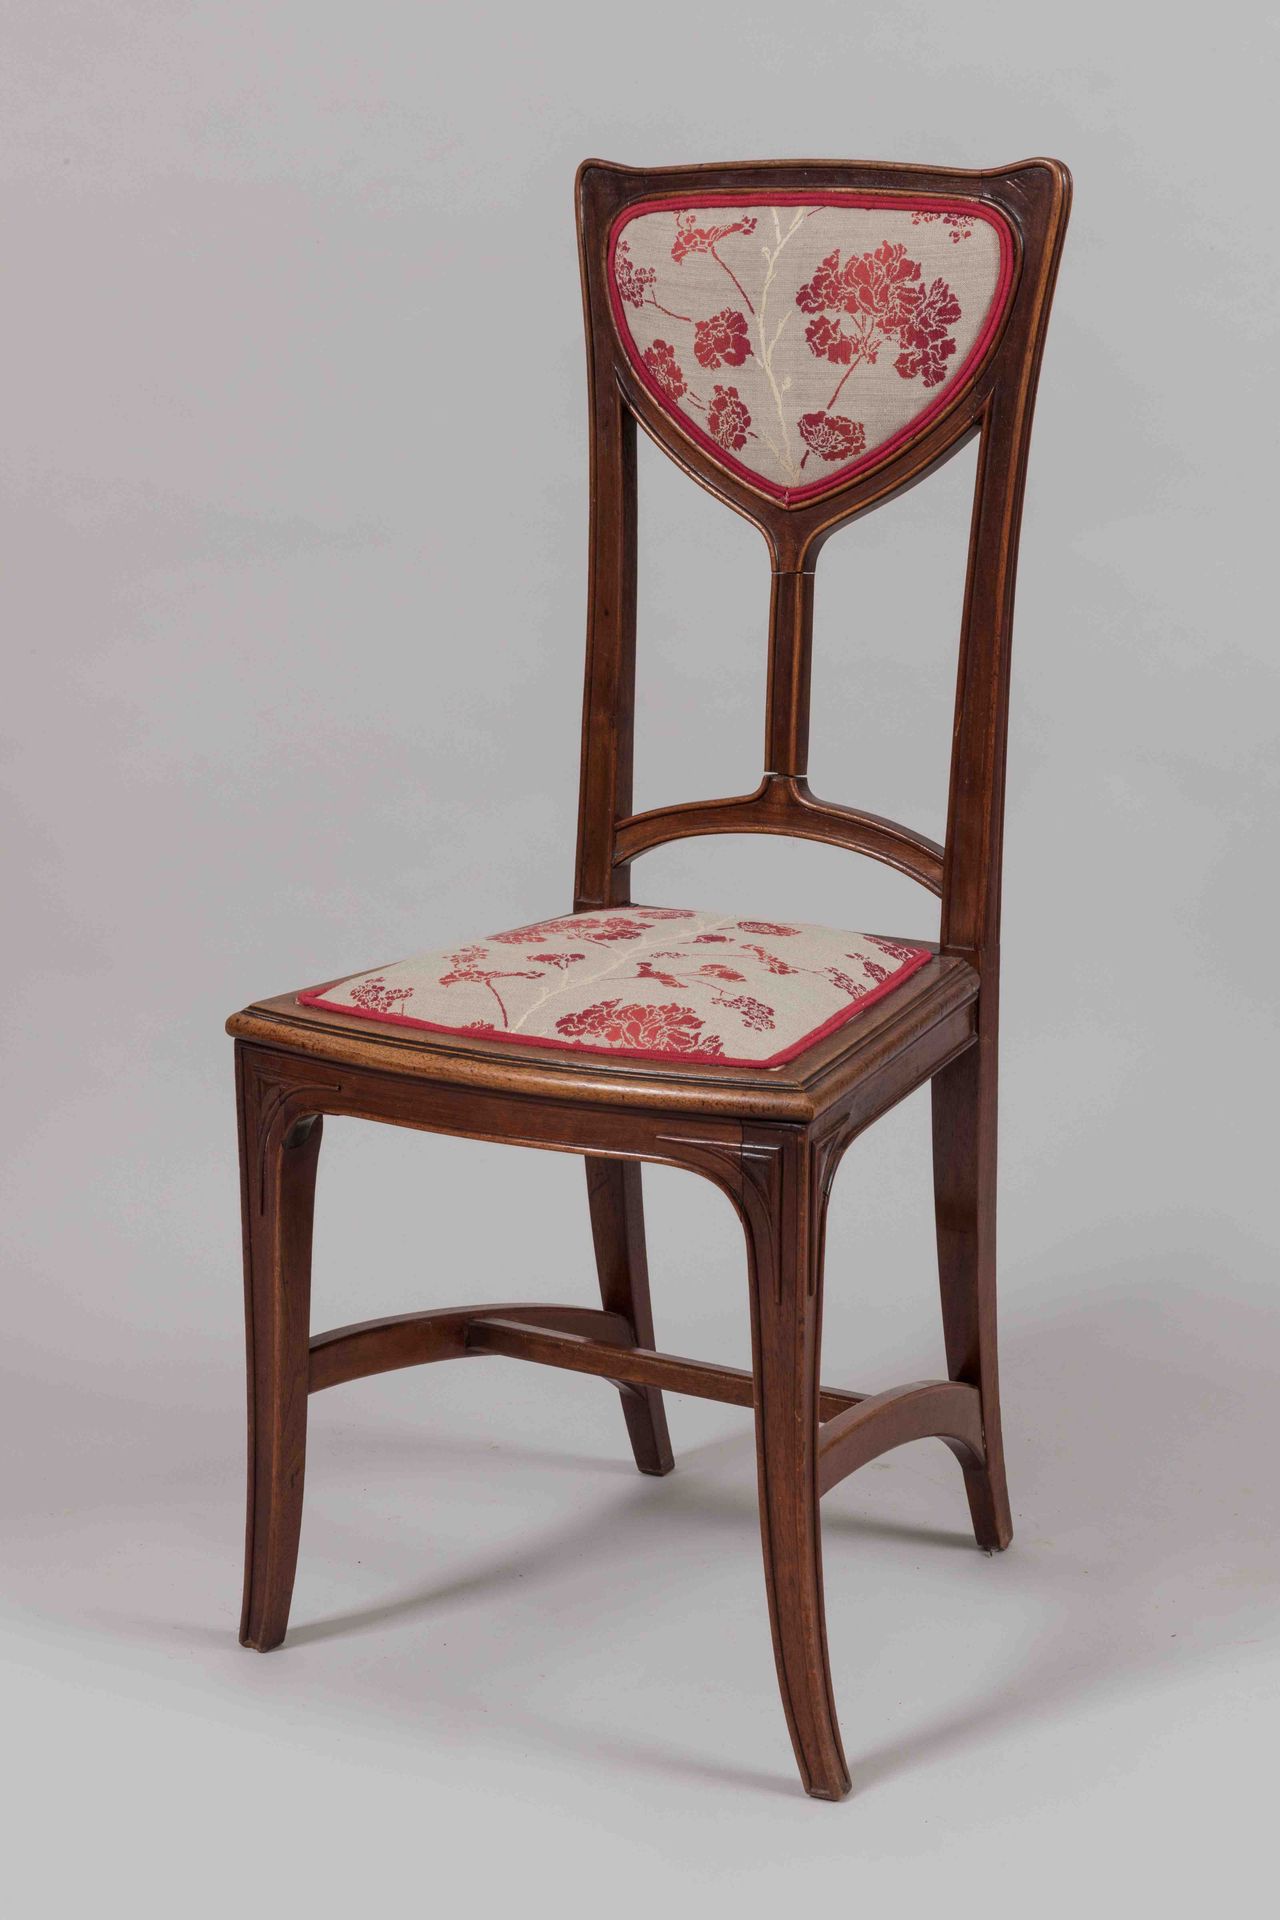 Null 一把桃花心木模制的护花板靠背椅，前腿有机芯，后腿有剑和H形支架。

英国艺术和手工艺作品。

高度：98厘米。宽度：42厘米。深度：40厘米。